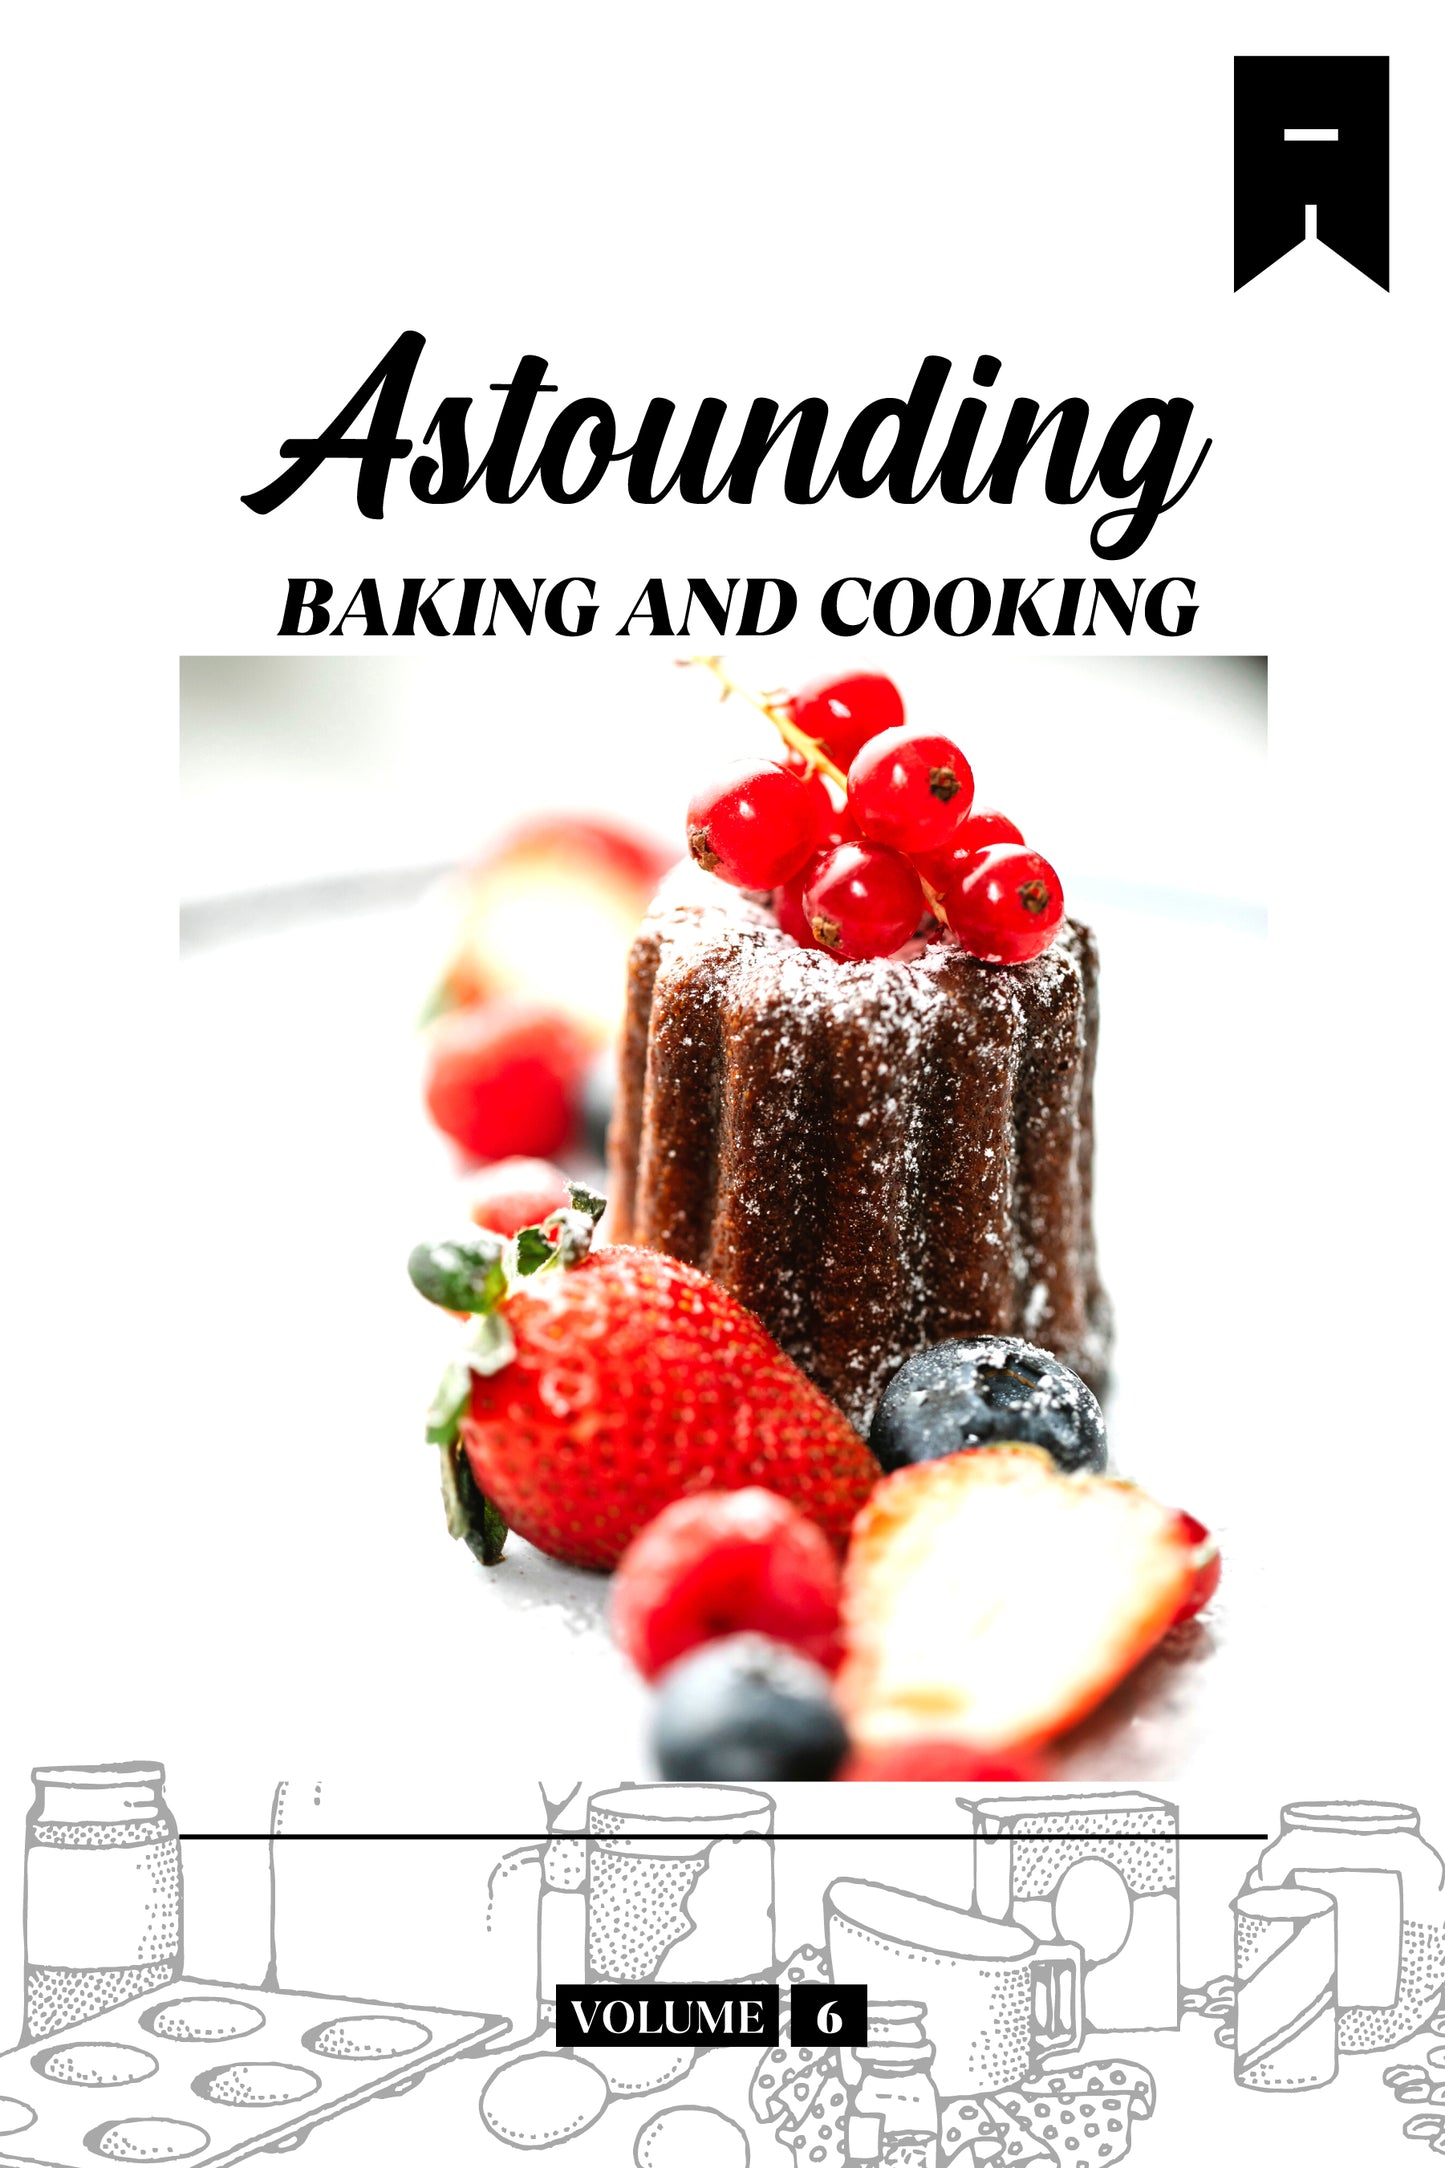 Astounding Baking (Volume 6) - Physical Book